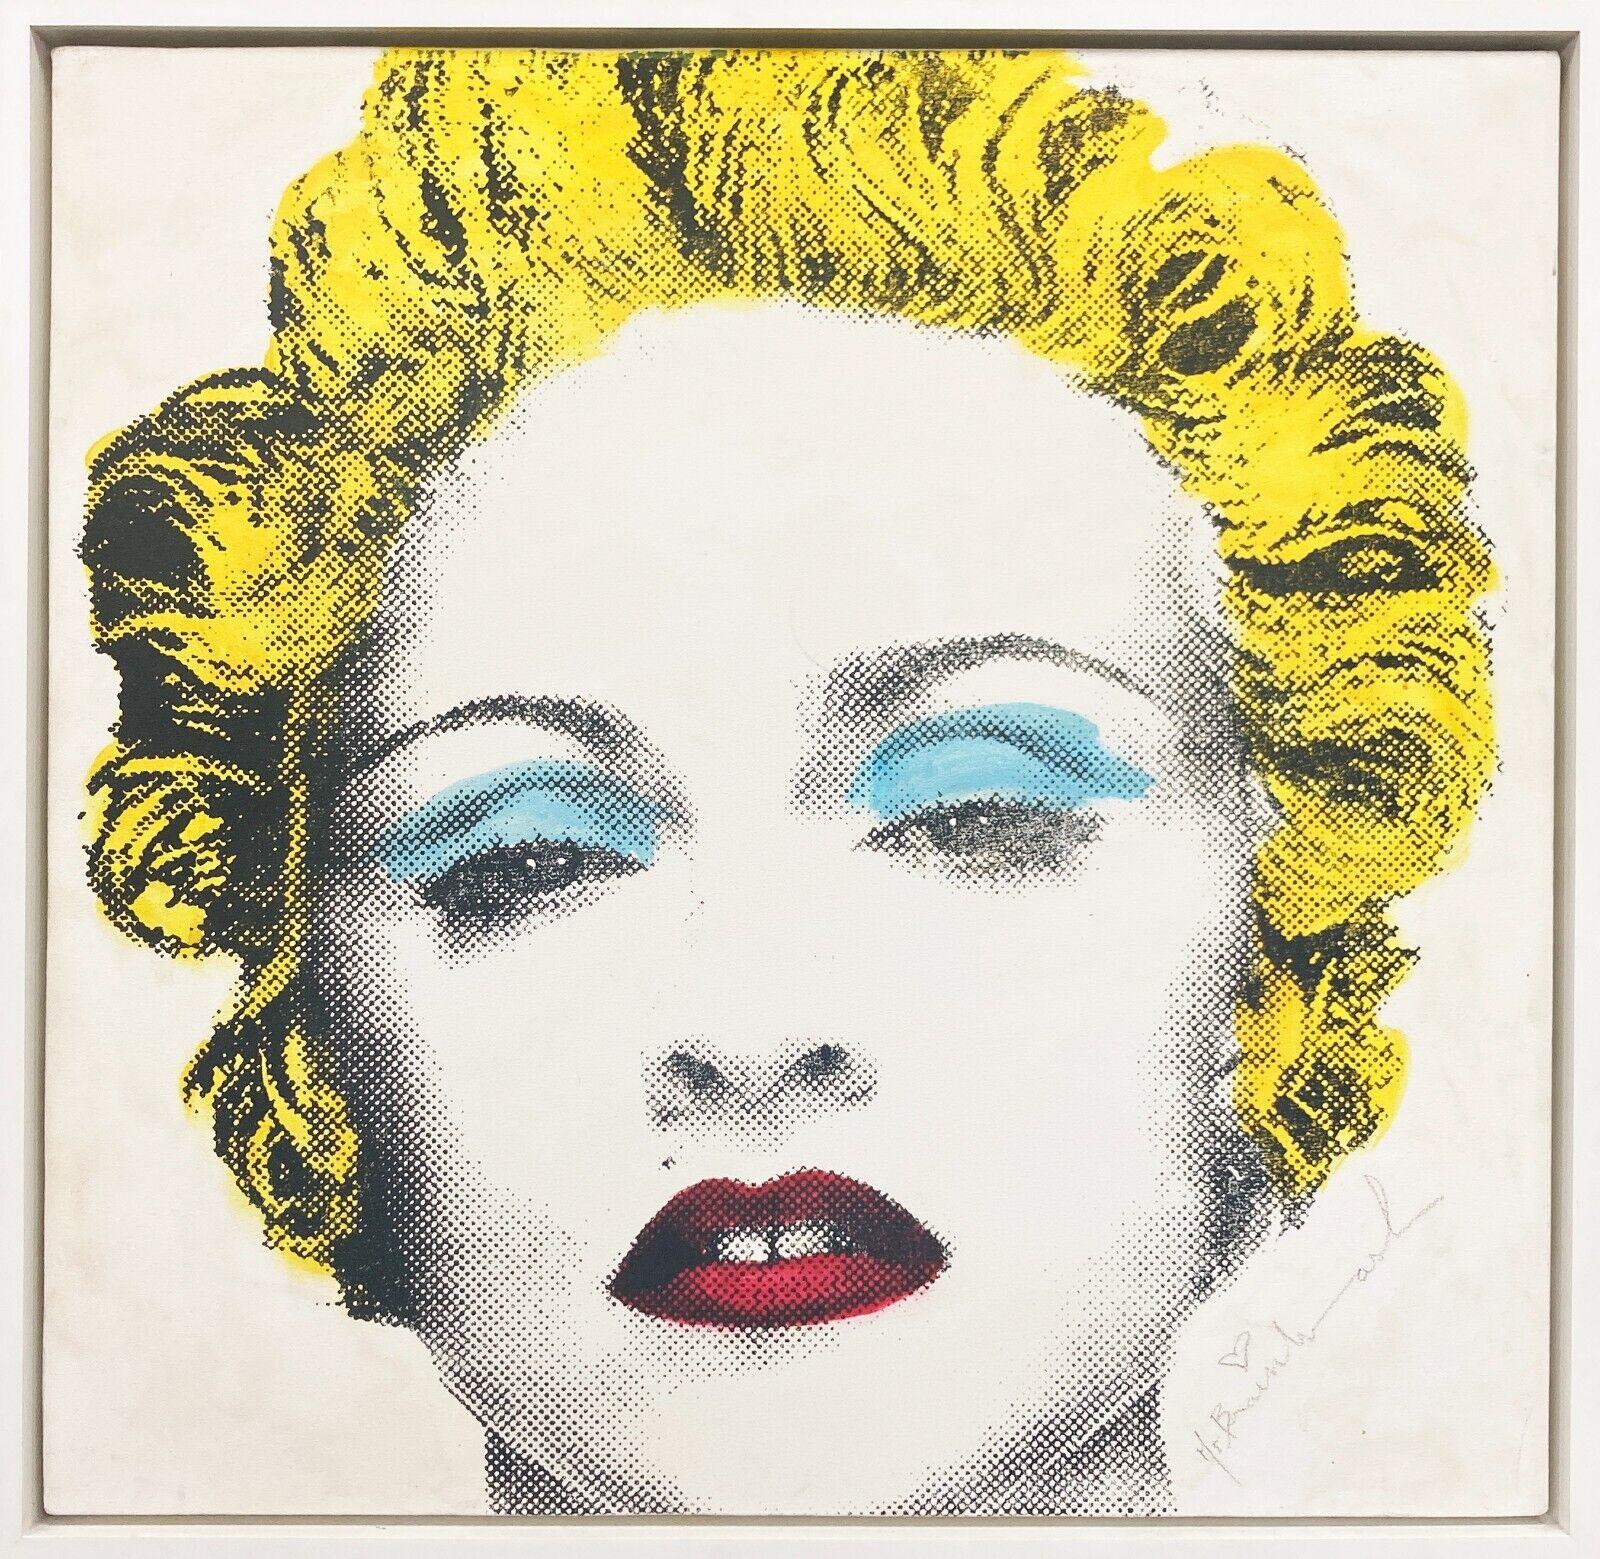 Mr. Brainwash Portrait Painting - Madonna - Original painting on canvas